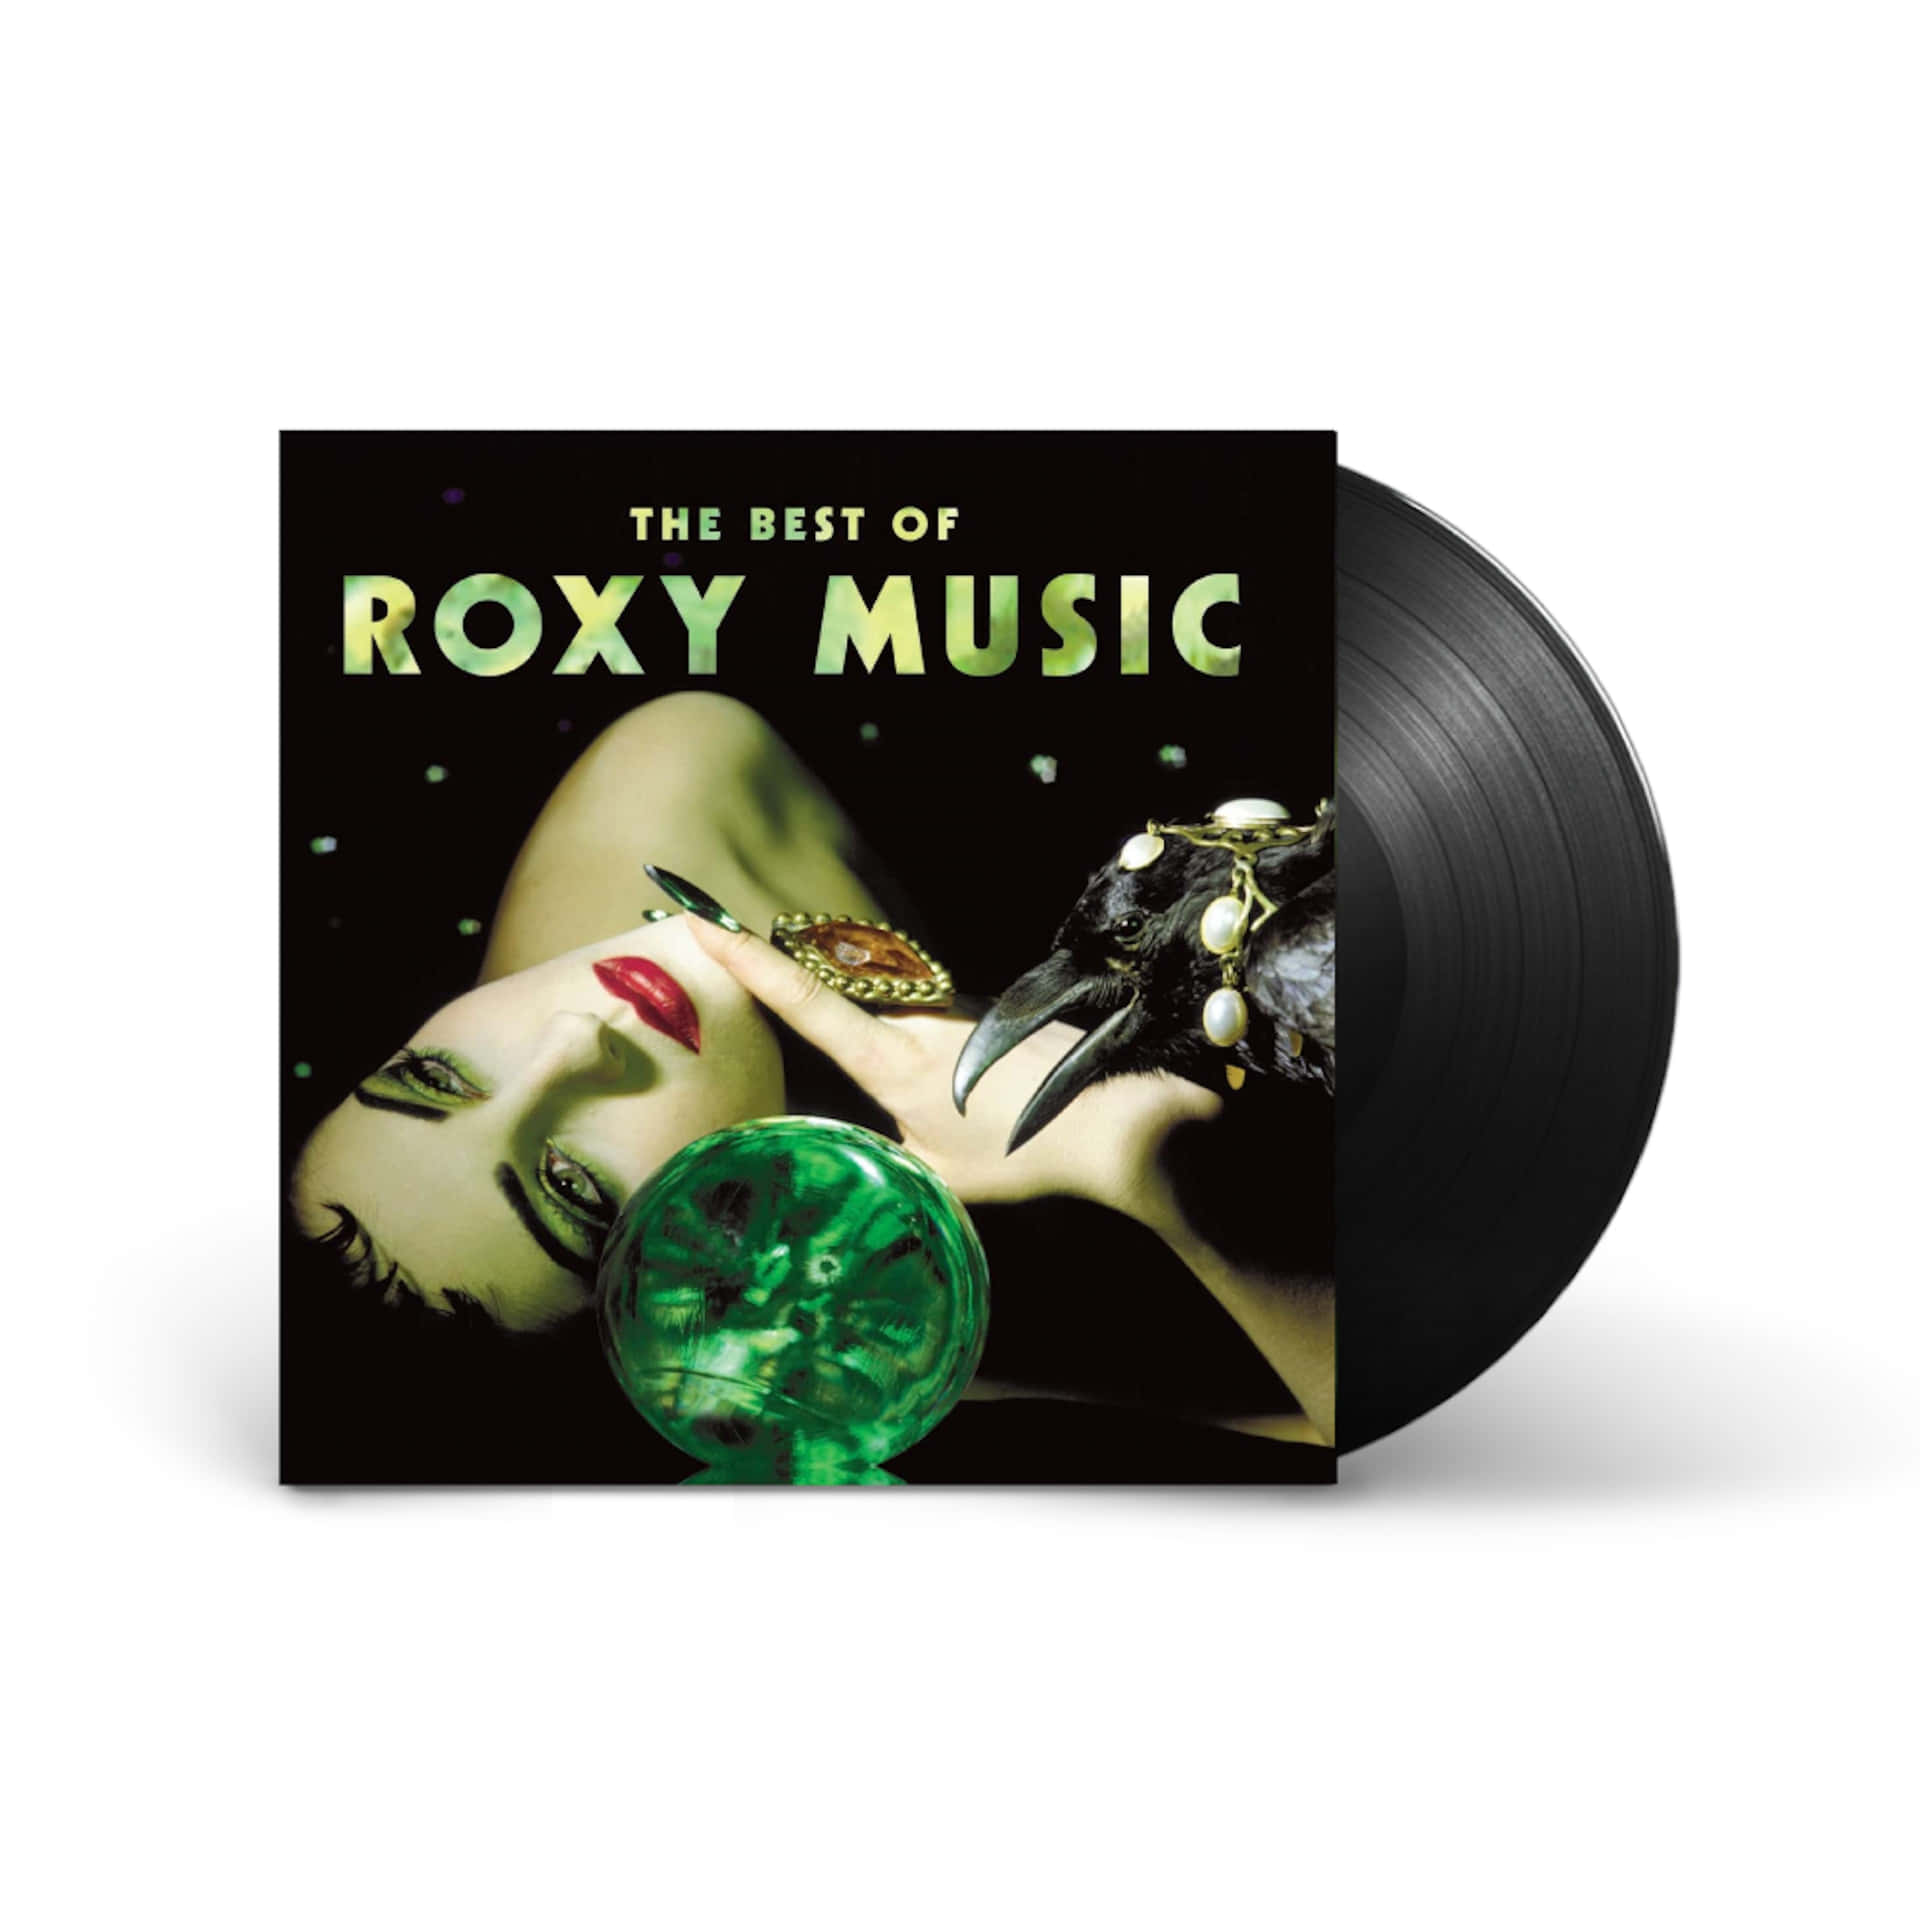 Retro Roxy Music Vinyl Album Cover Wallpaper